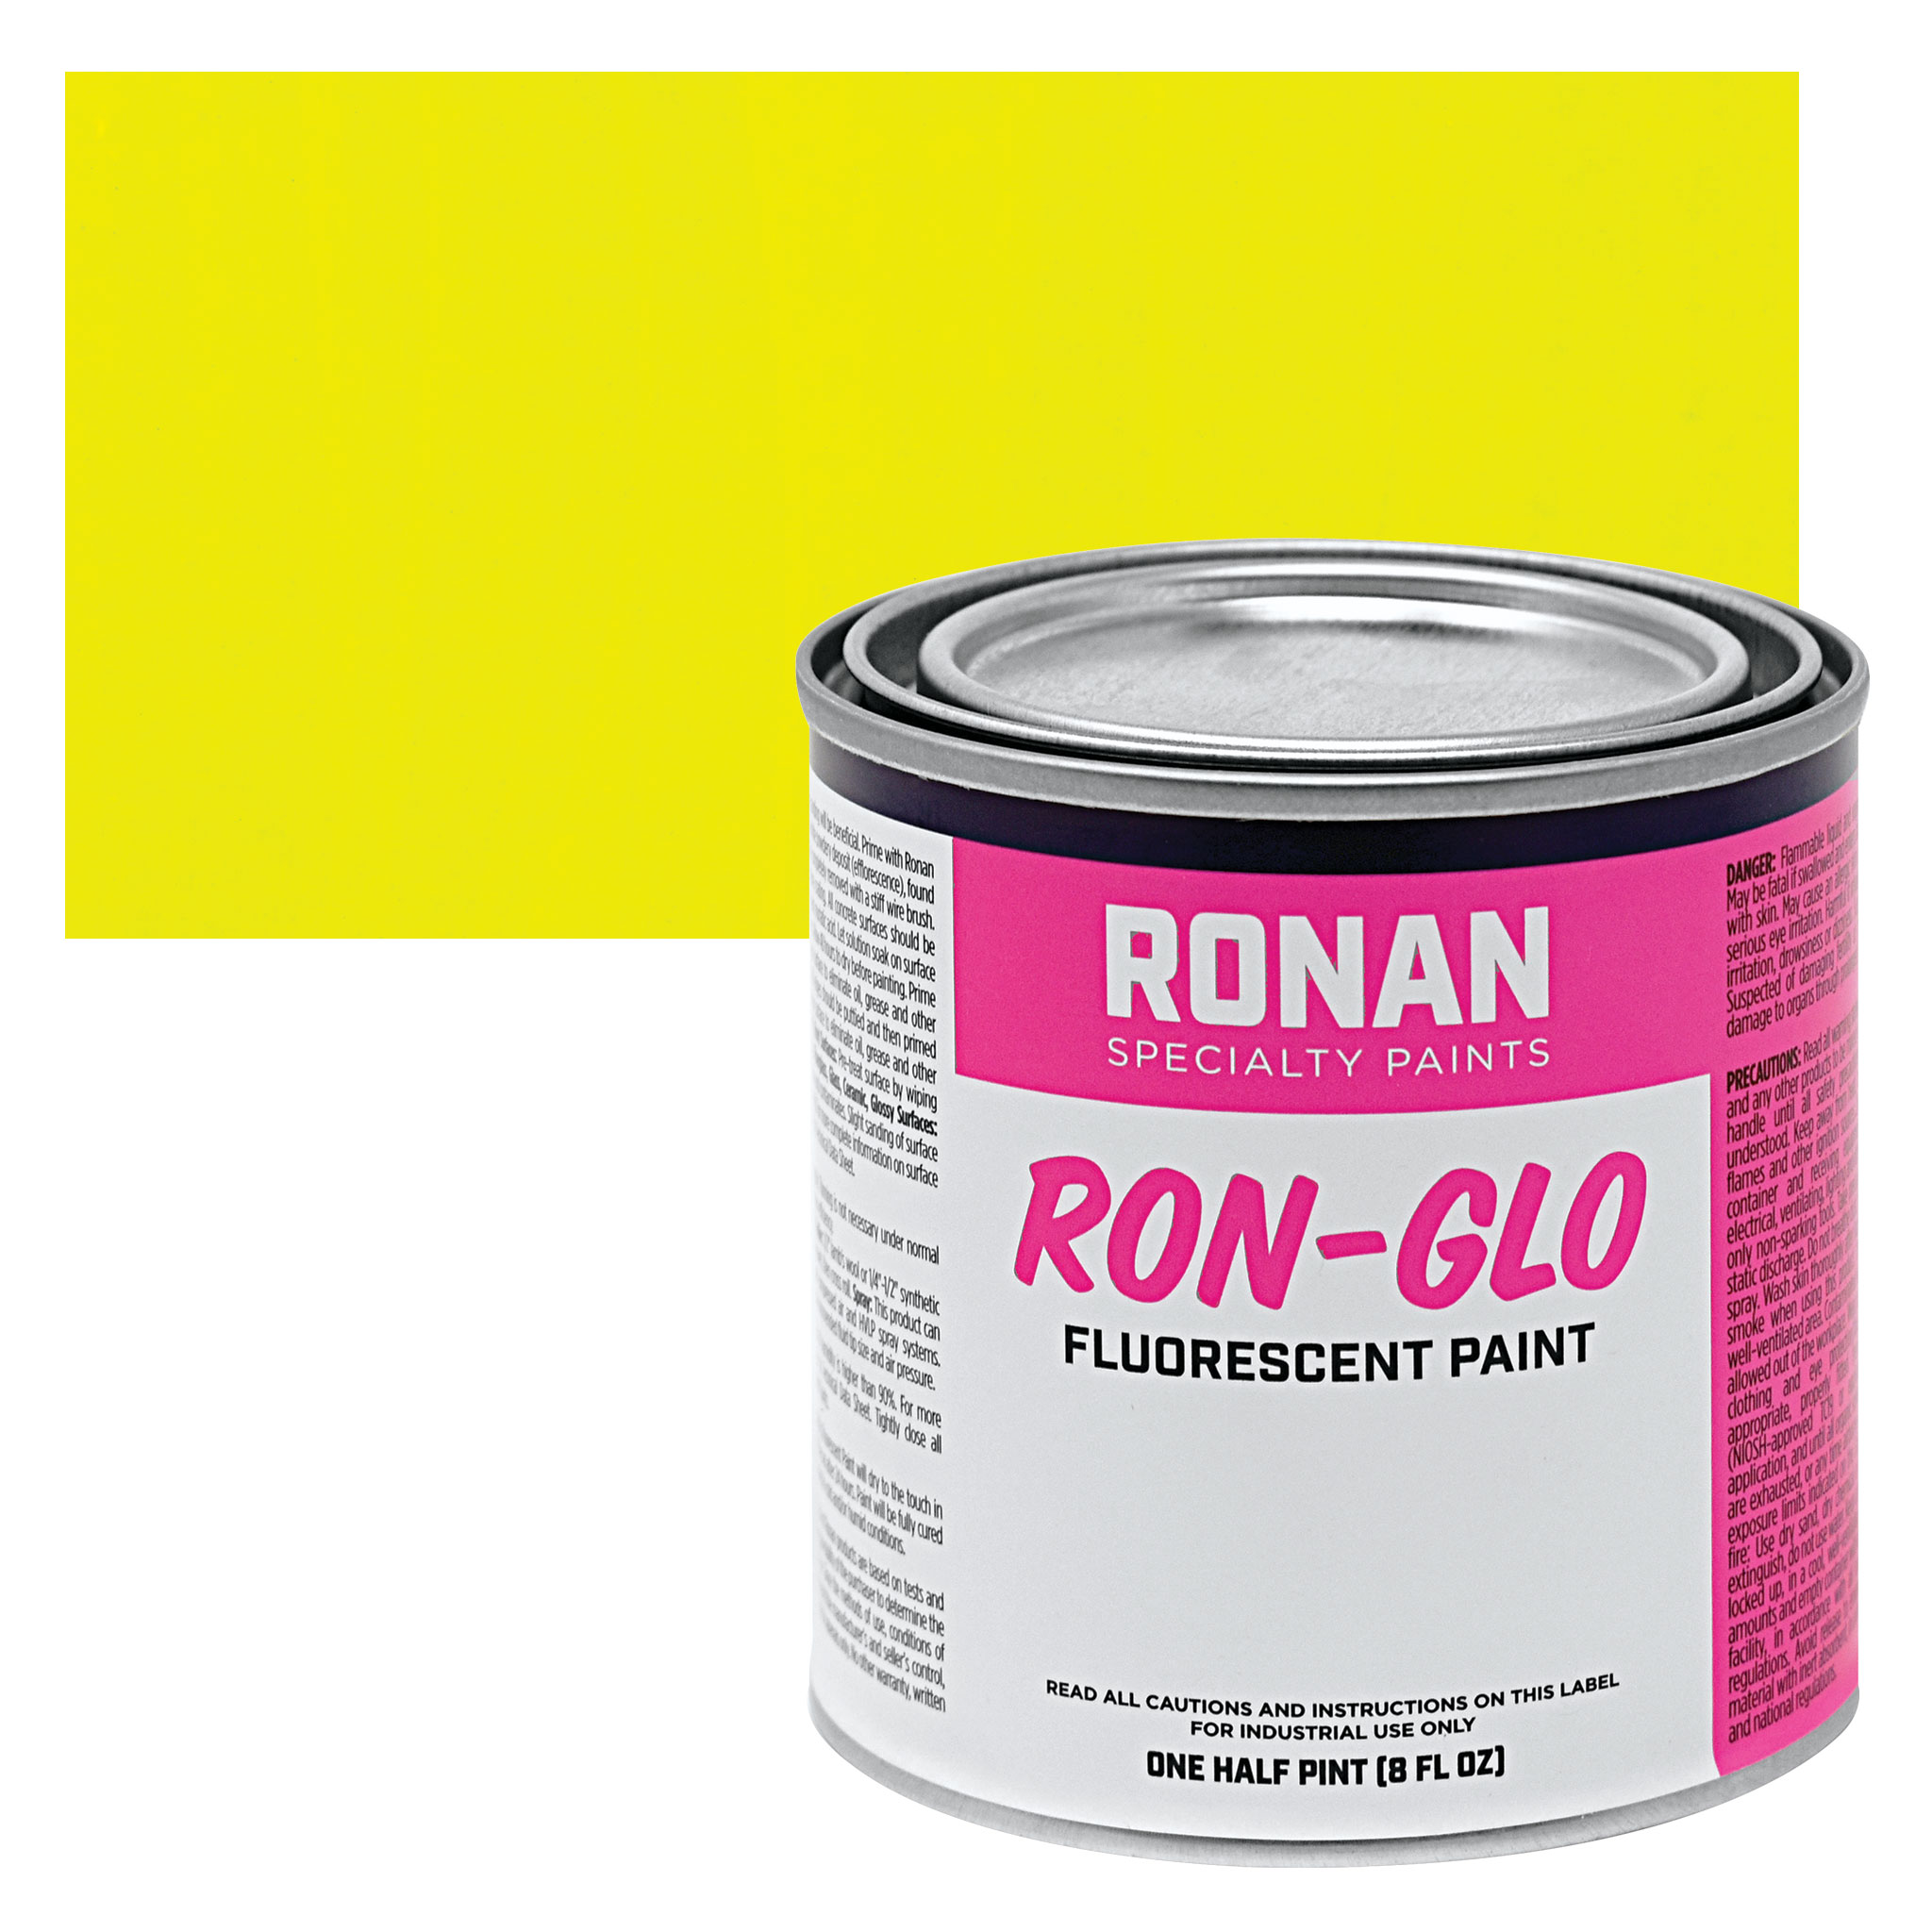 Ronan #RG06 lime Yellow Ron-Glo Fluorescent Paint Gallon